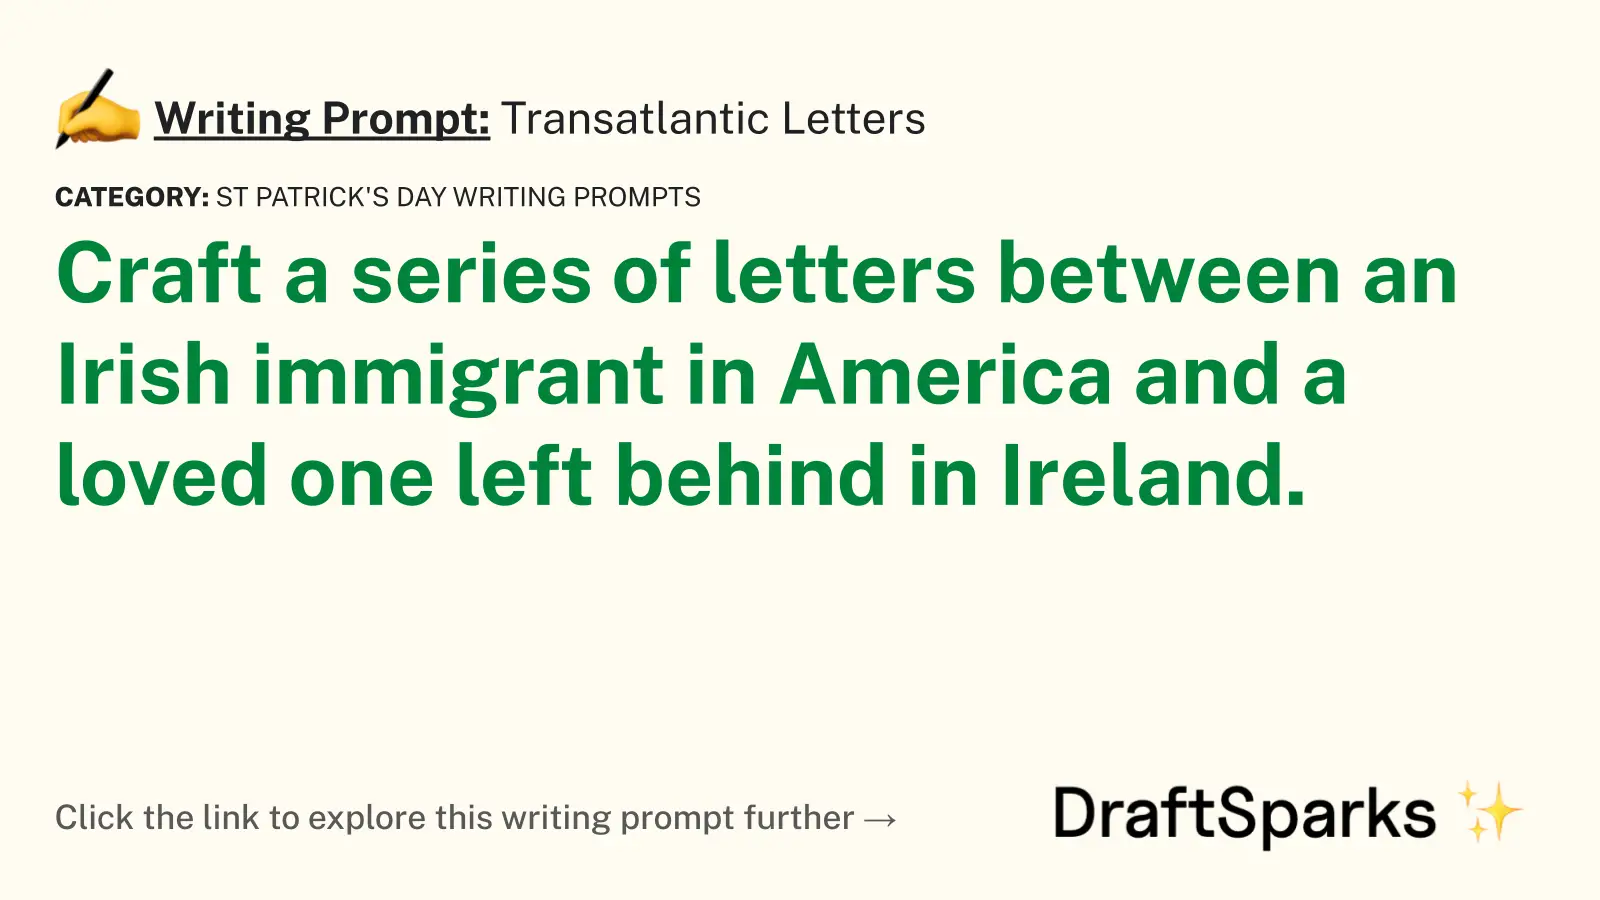 Transatlantic Letters